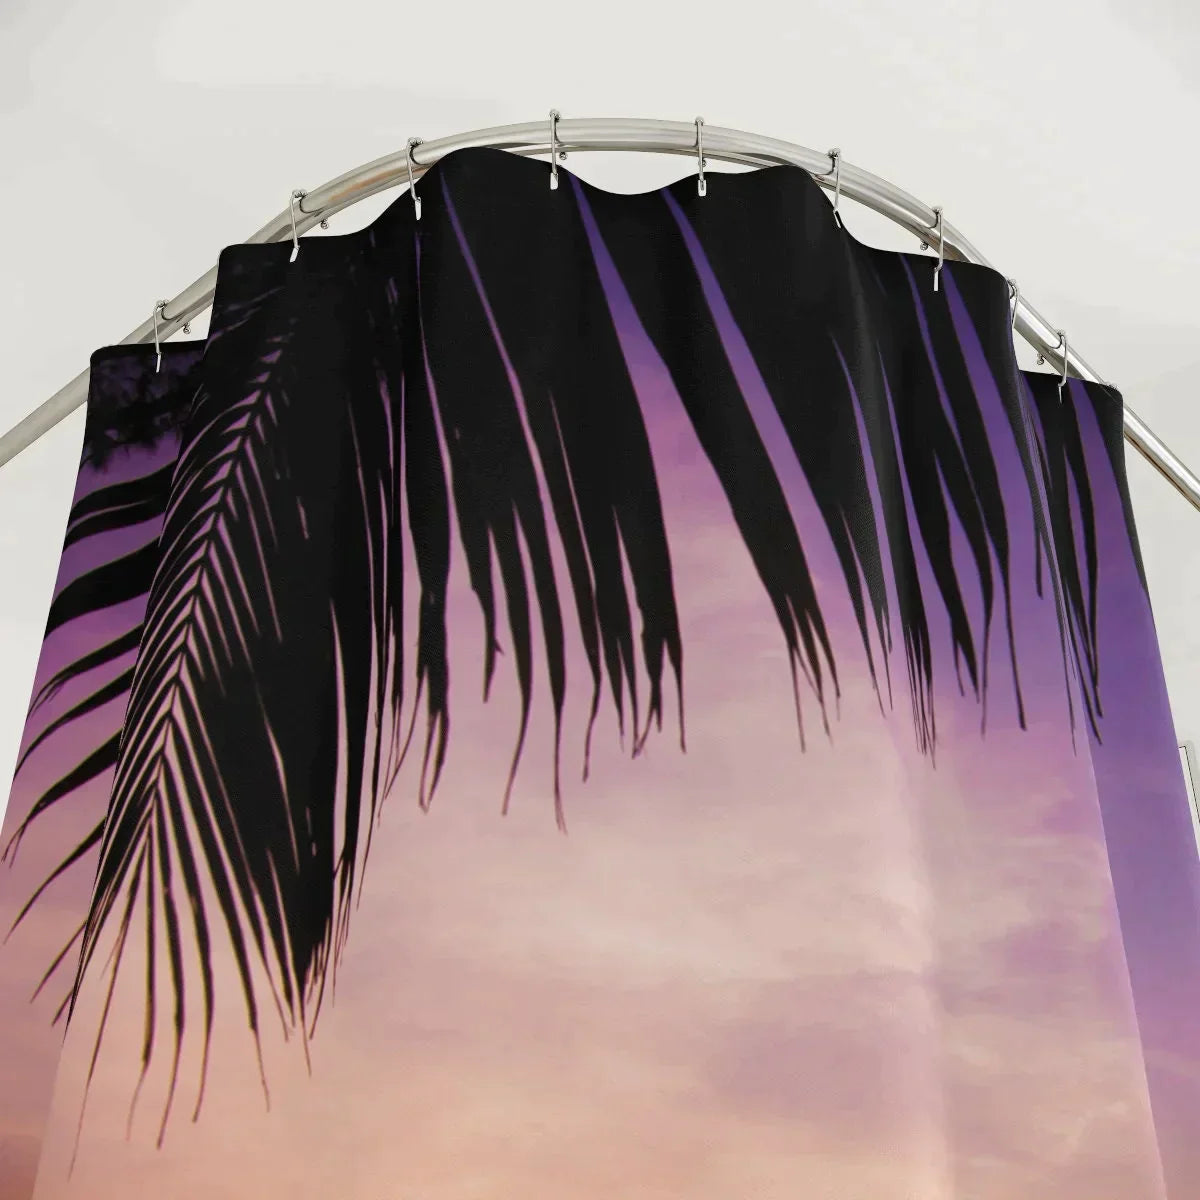 Boho Shower Curtain Bobo Sunset Shower Curtain, Cool Cute Bathroom Accessories, Groovy Retro Shower Curtain, Extra Long Shower Curtain